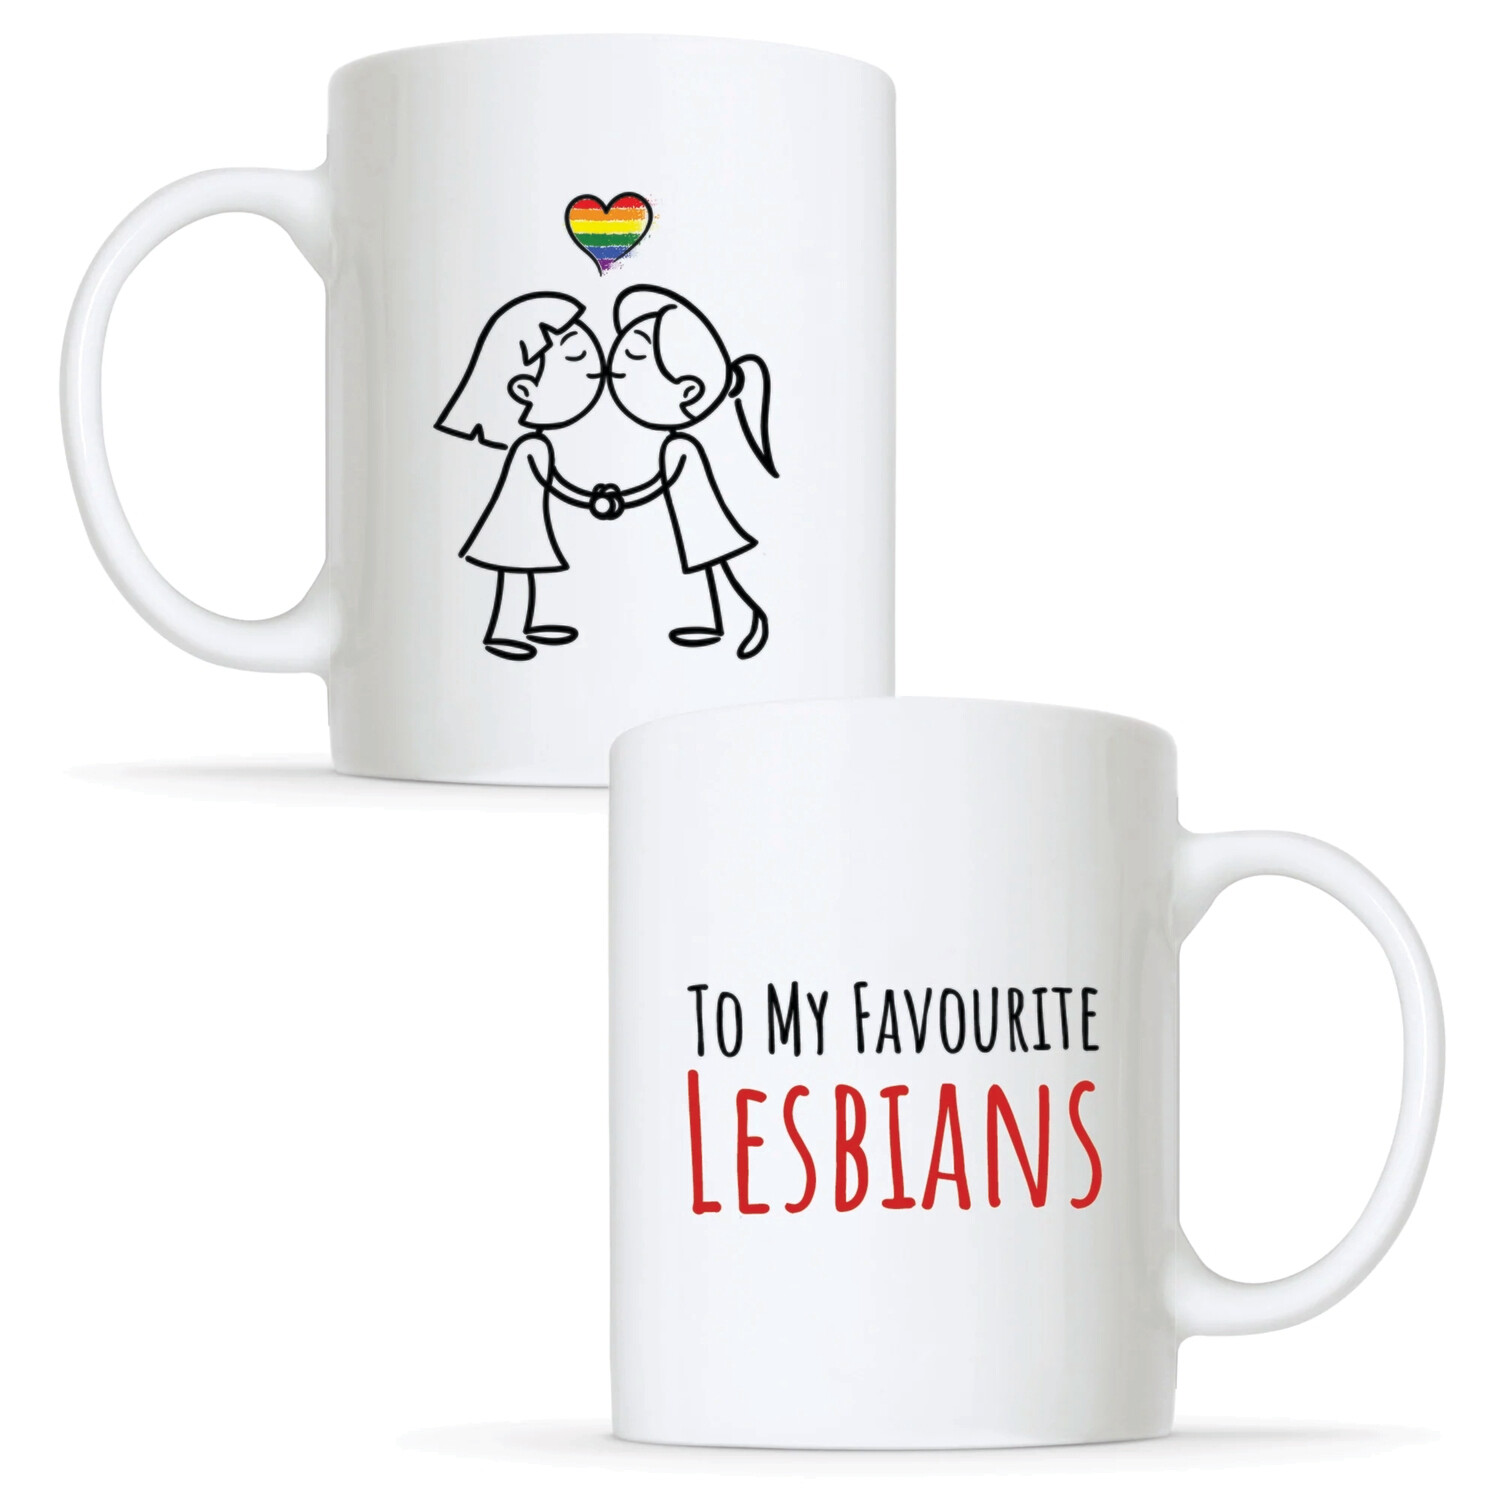 To my Favourite Lesbians - Lesbian Gay Couple Mug Set